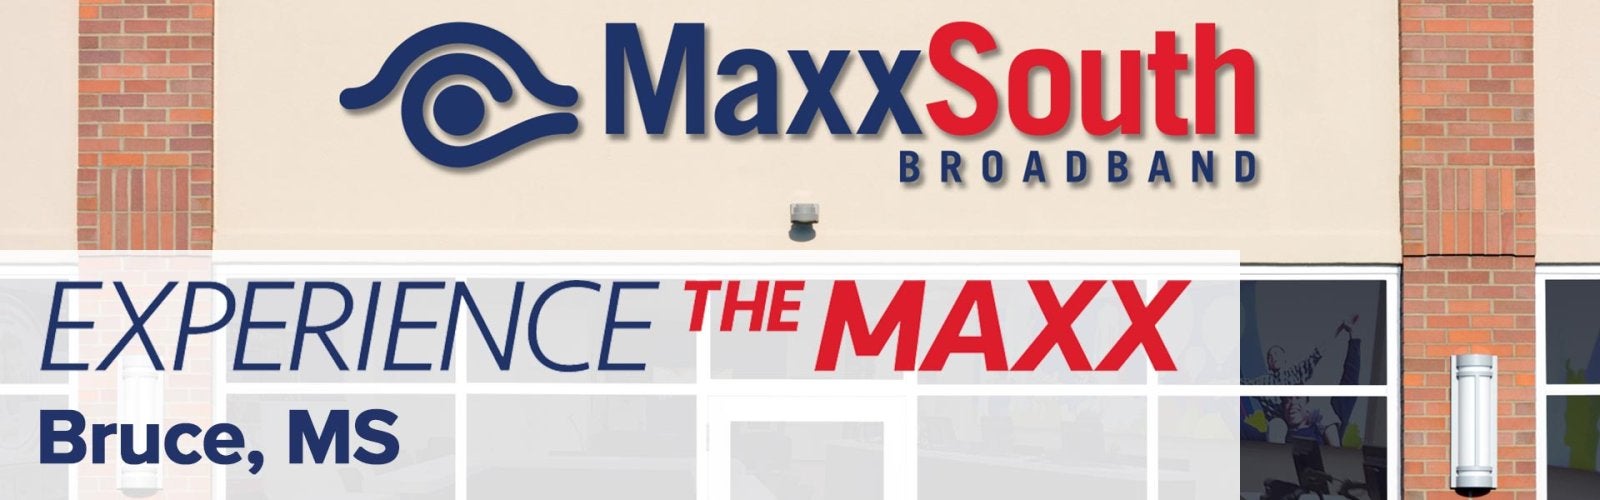 maxxsouth store near me, maxxsouth bruce store, bruce, maxxsouth support